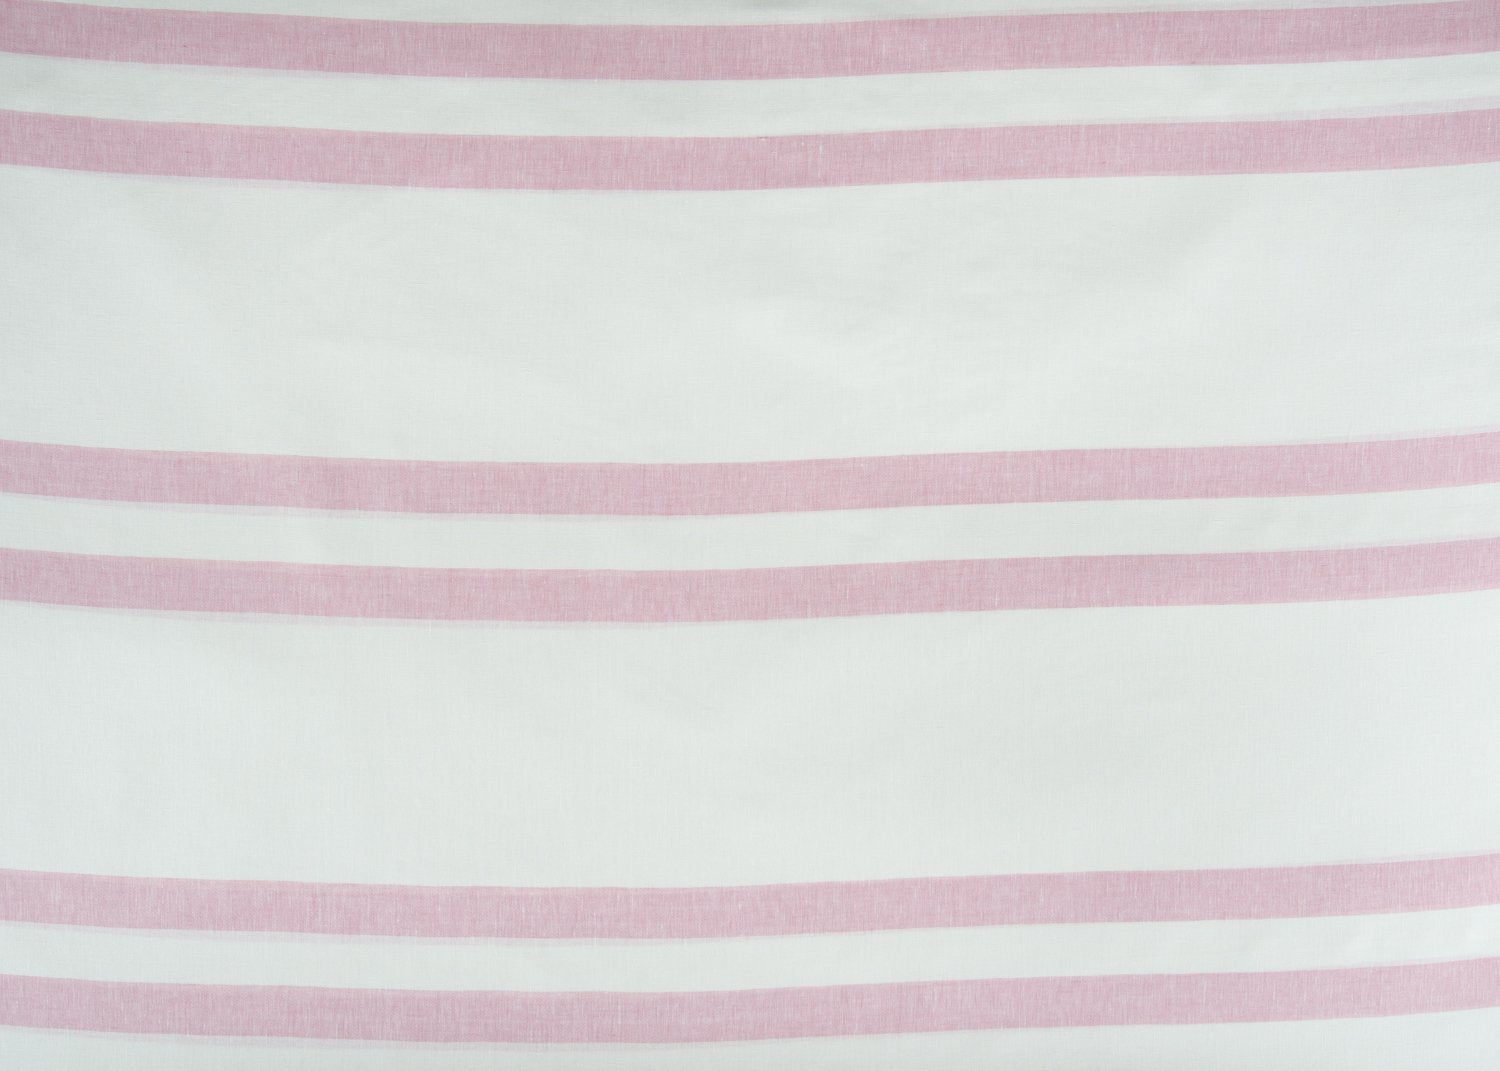 Stripped Stripe Pink